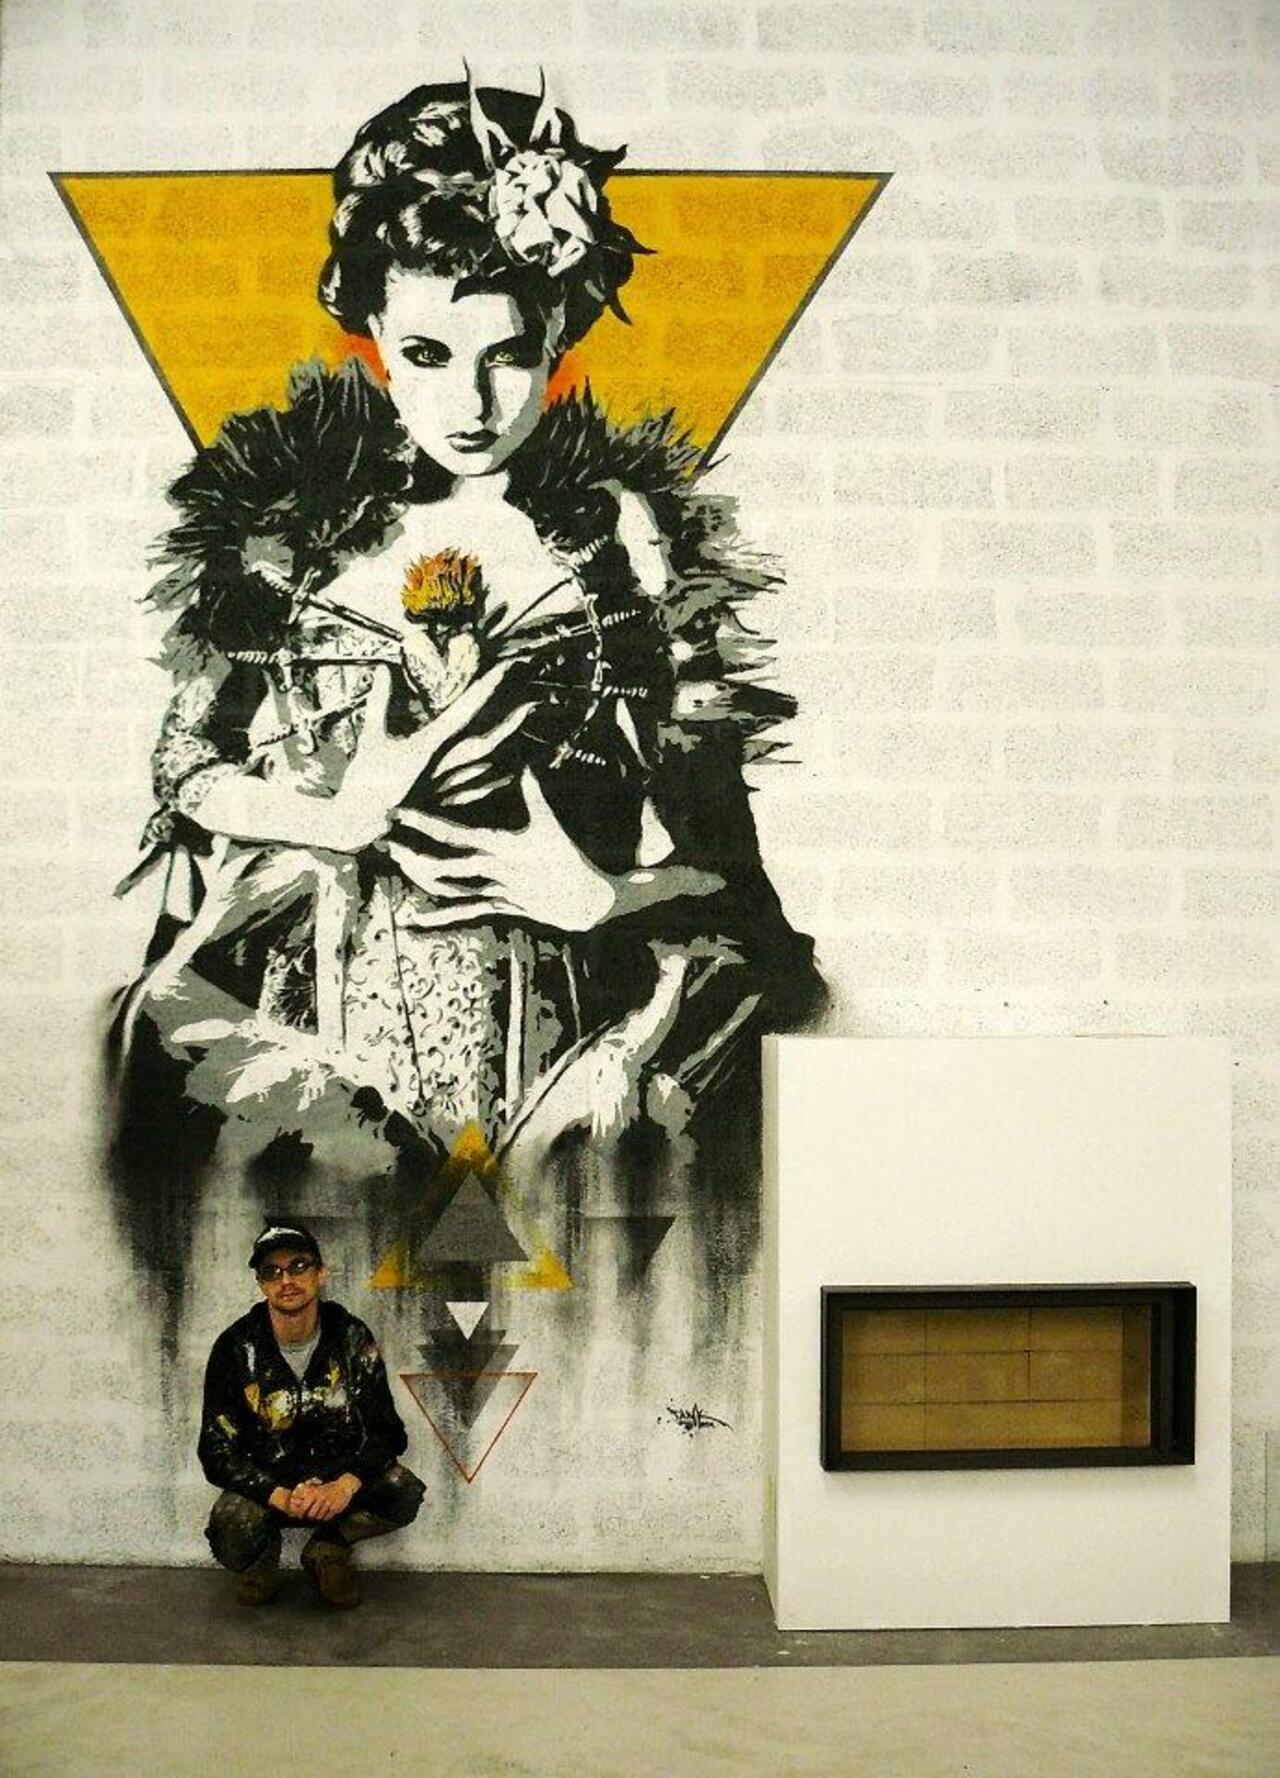 “@5putnik1: Iconic Suave #graffiti #streetart #art #funky #dope . : http://t.co/CJAtpINhID